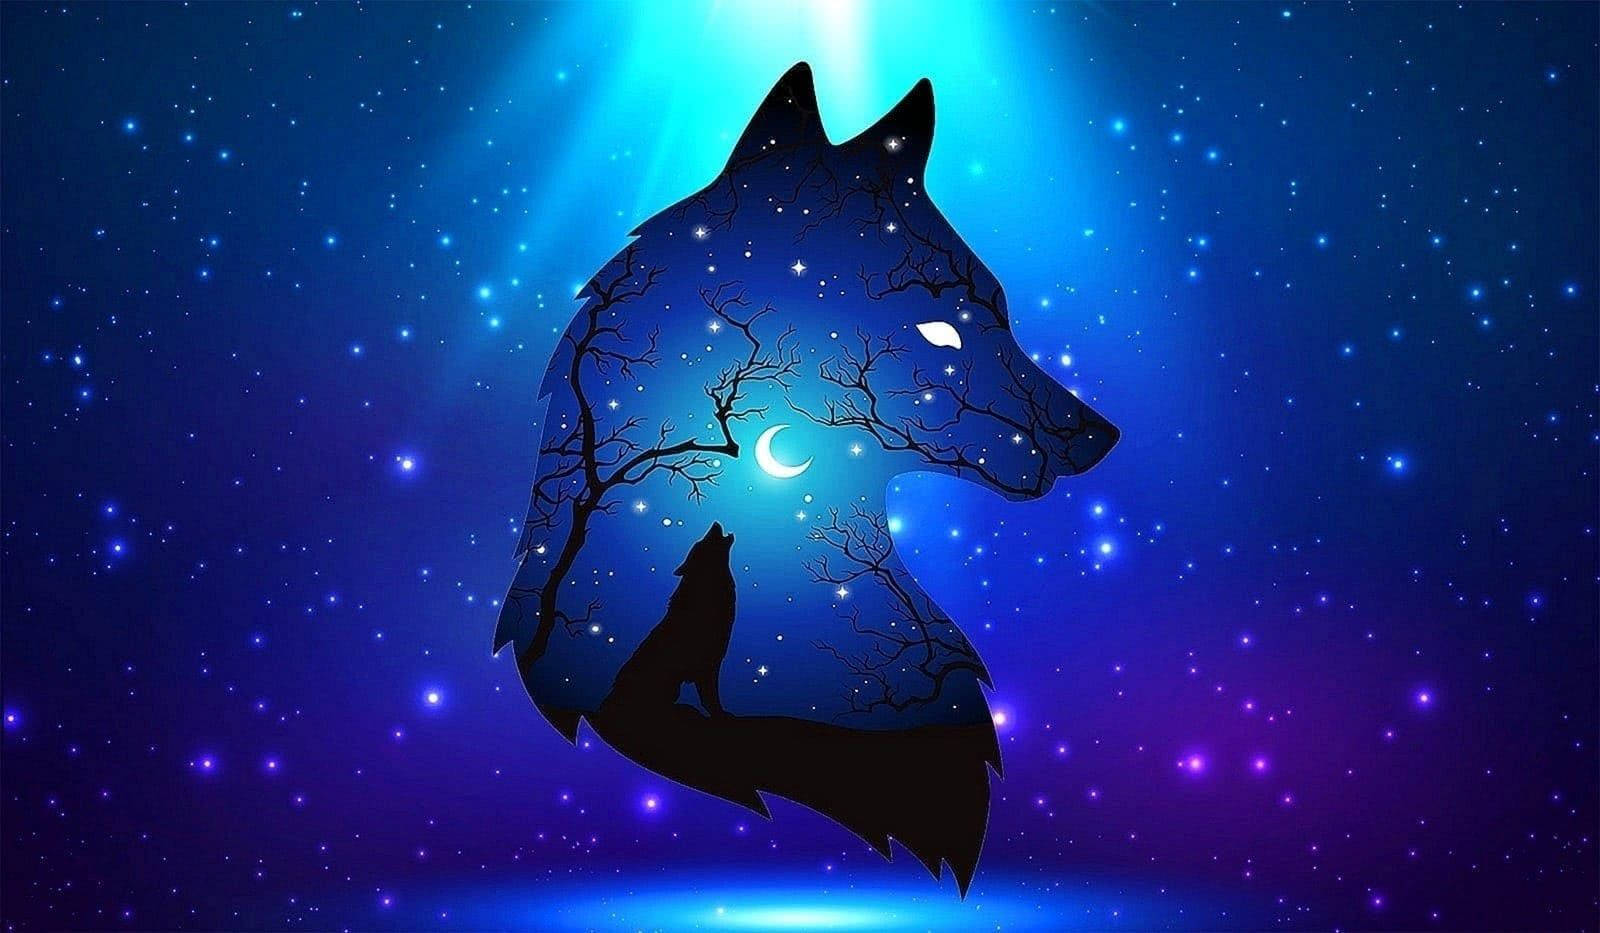 Best Cool Fox Silhouette Wallpaper